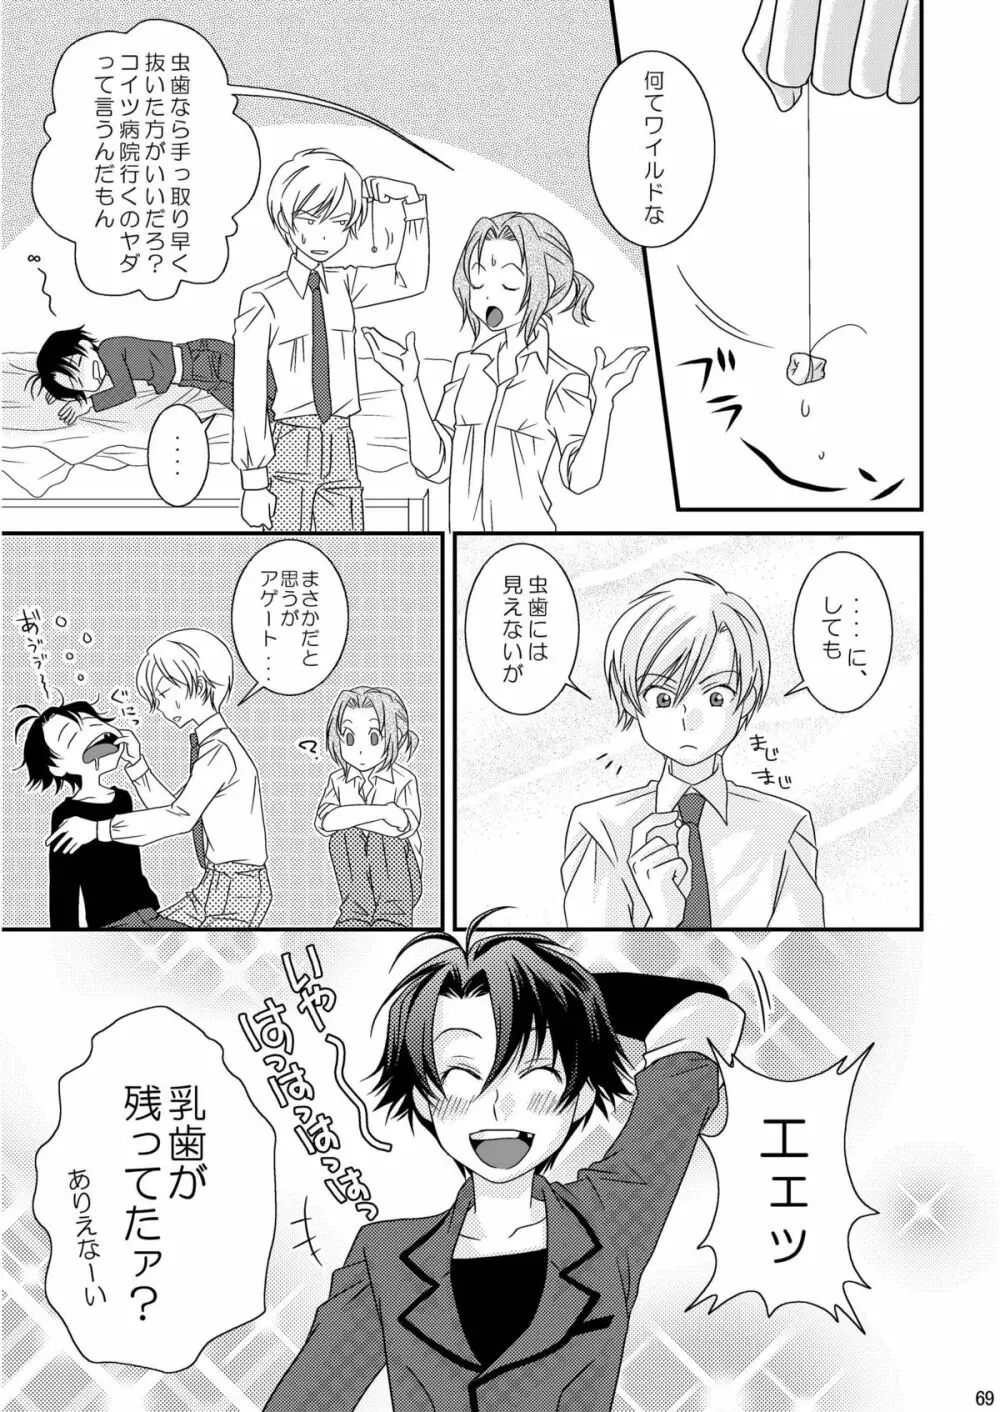 Re: ぷれい2 - page69